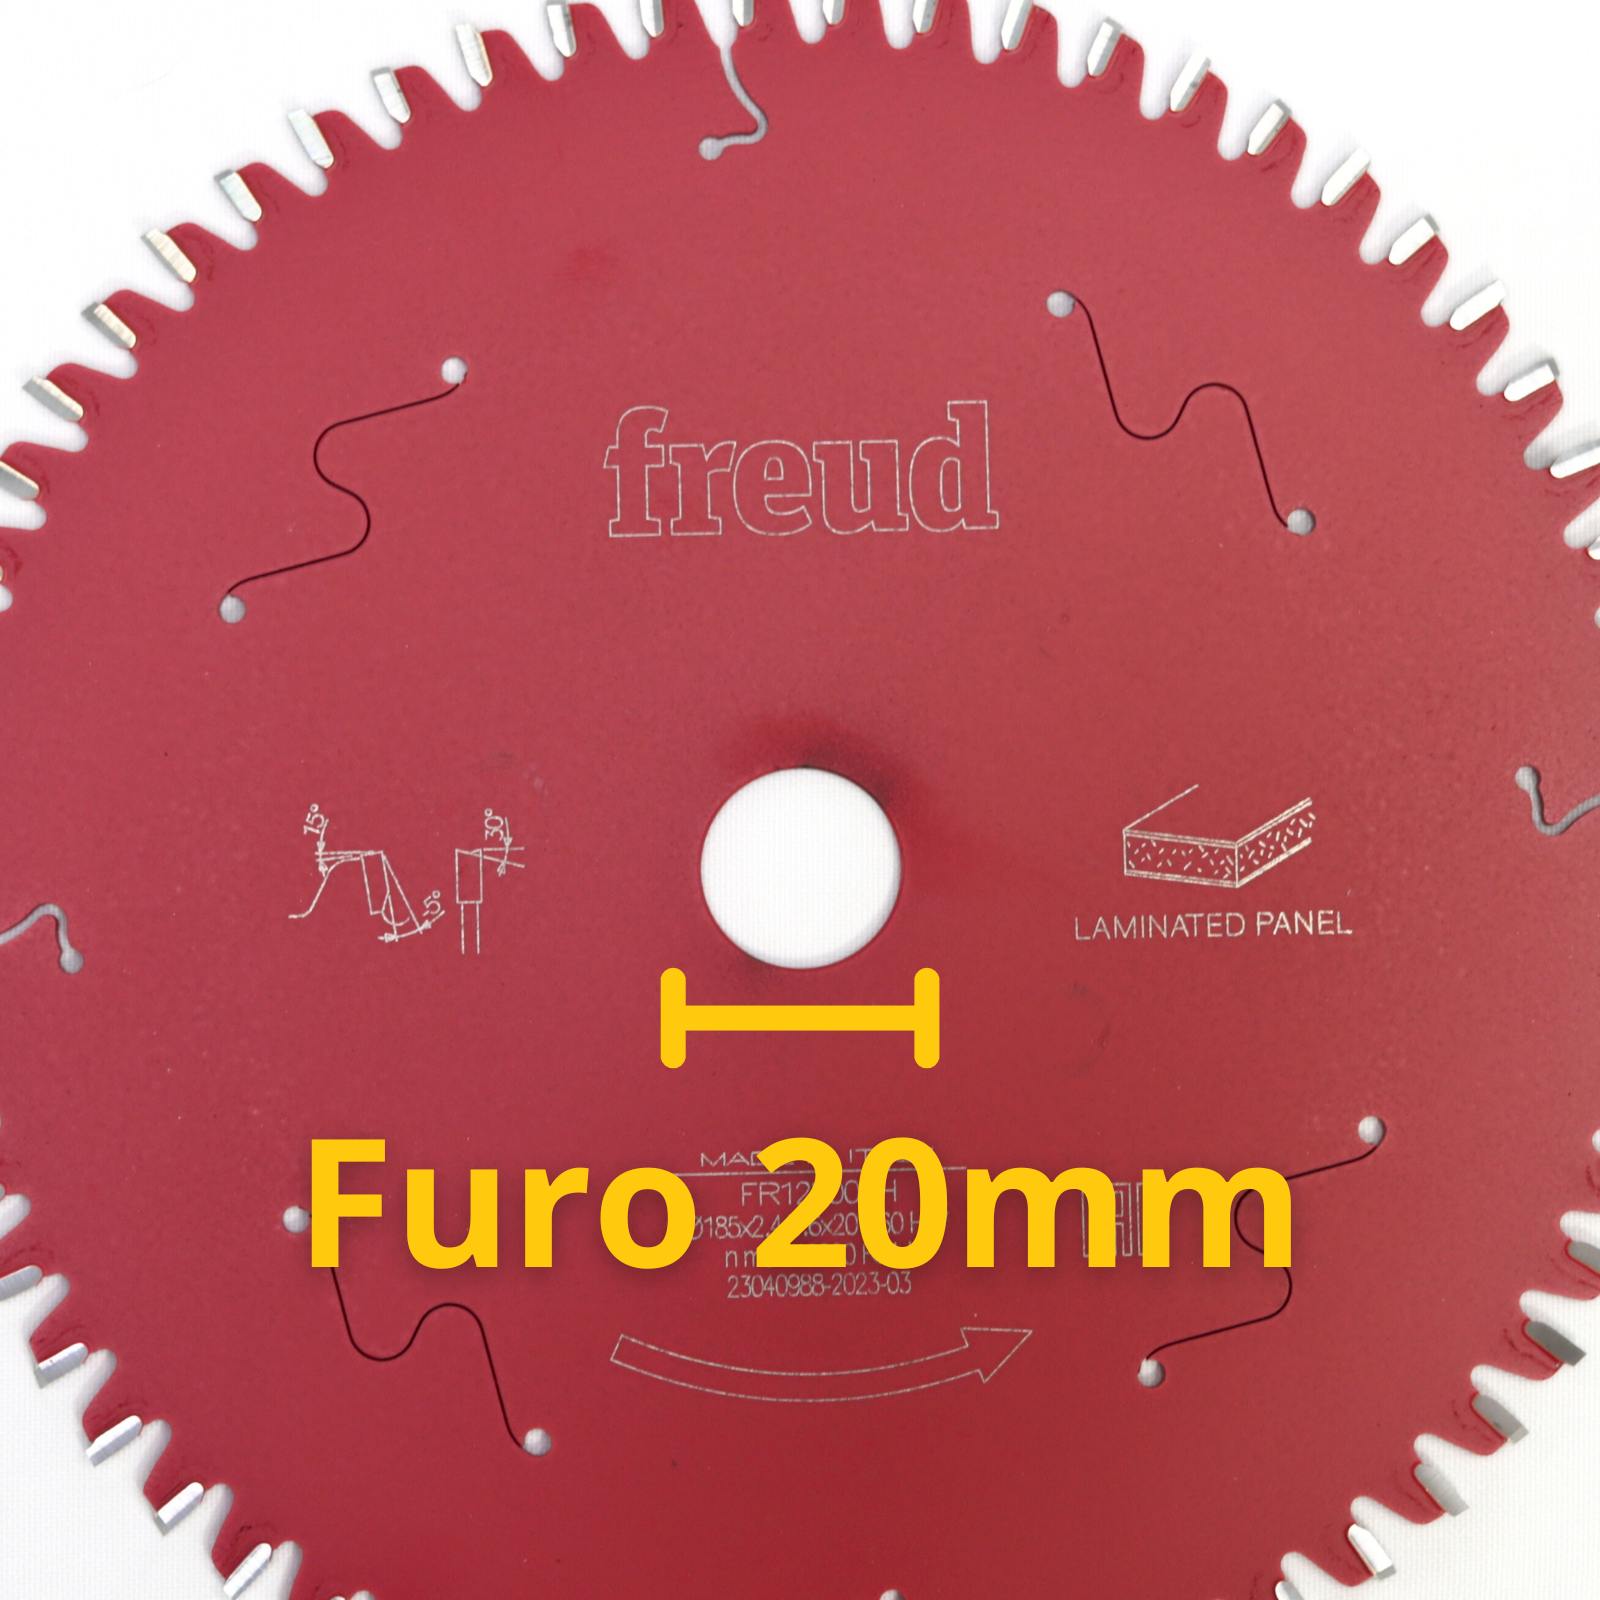 Disco serra circular MDF 7 1/4 FREUD - 60D corte super limpo